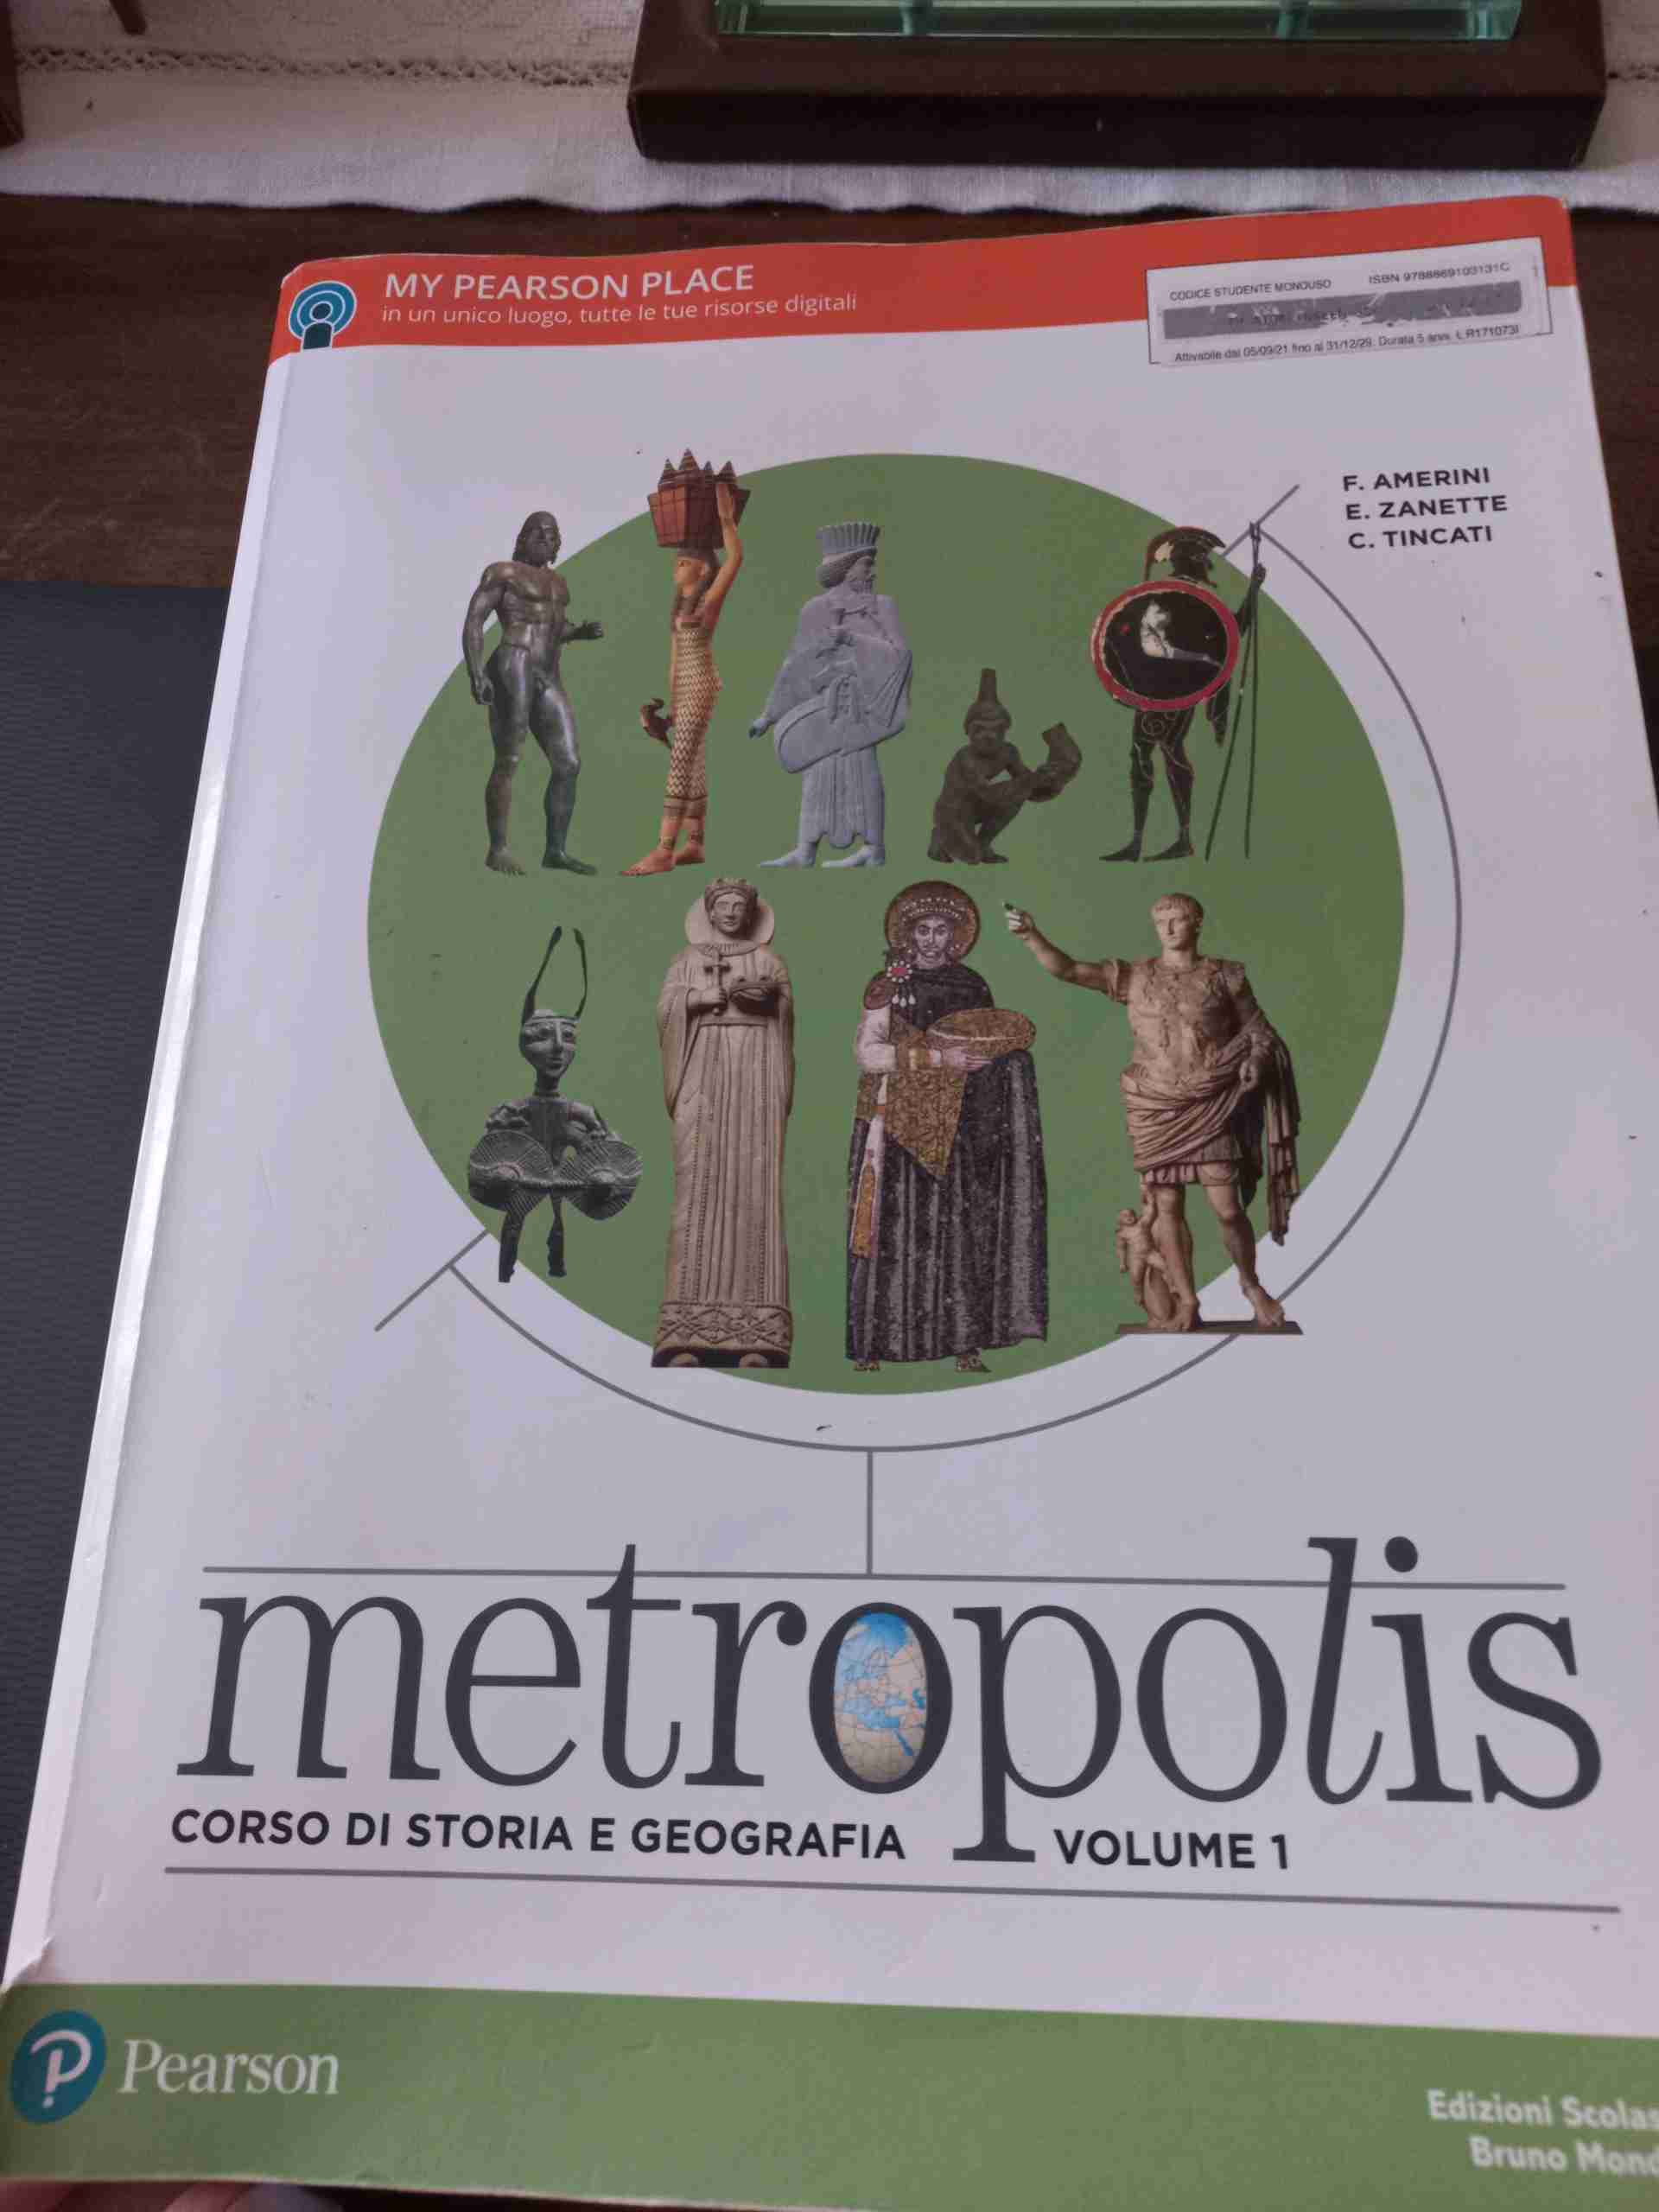 Metropolis volume 1